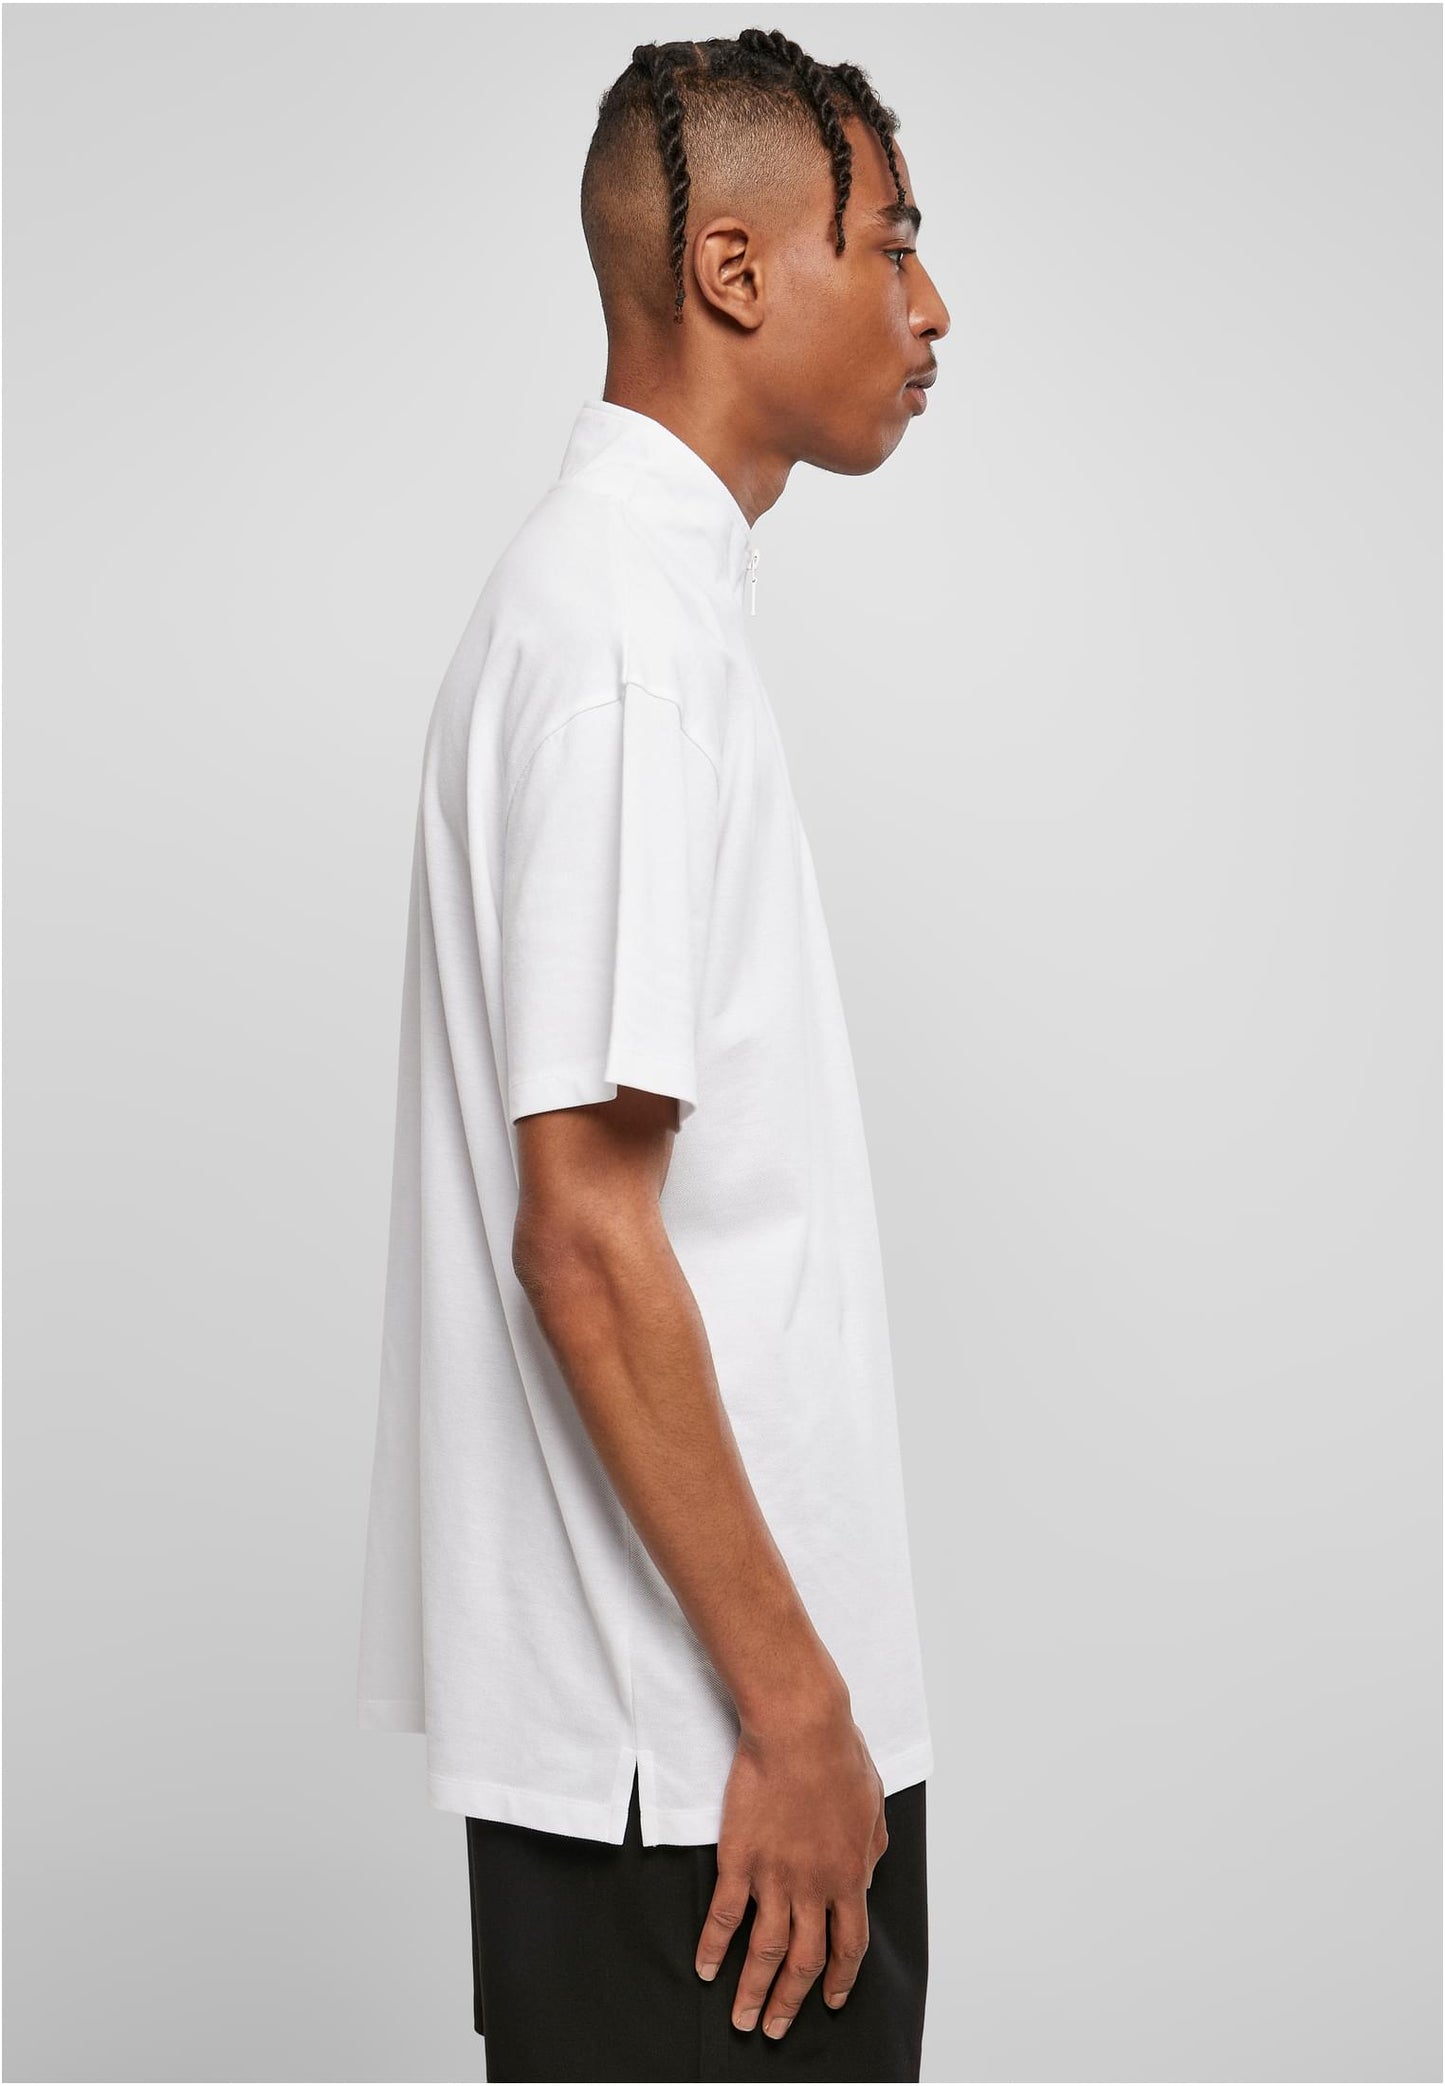 Urban Classics Boxy Zip Pique T-Shirt in weiß